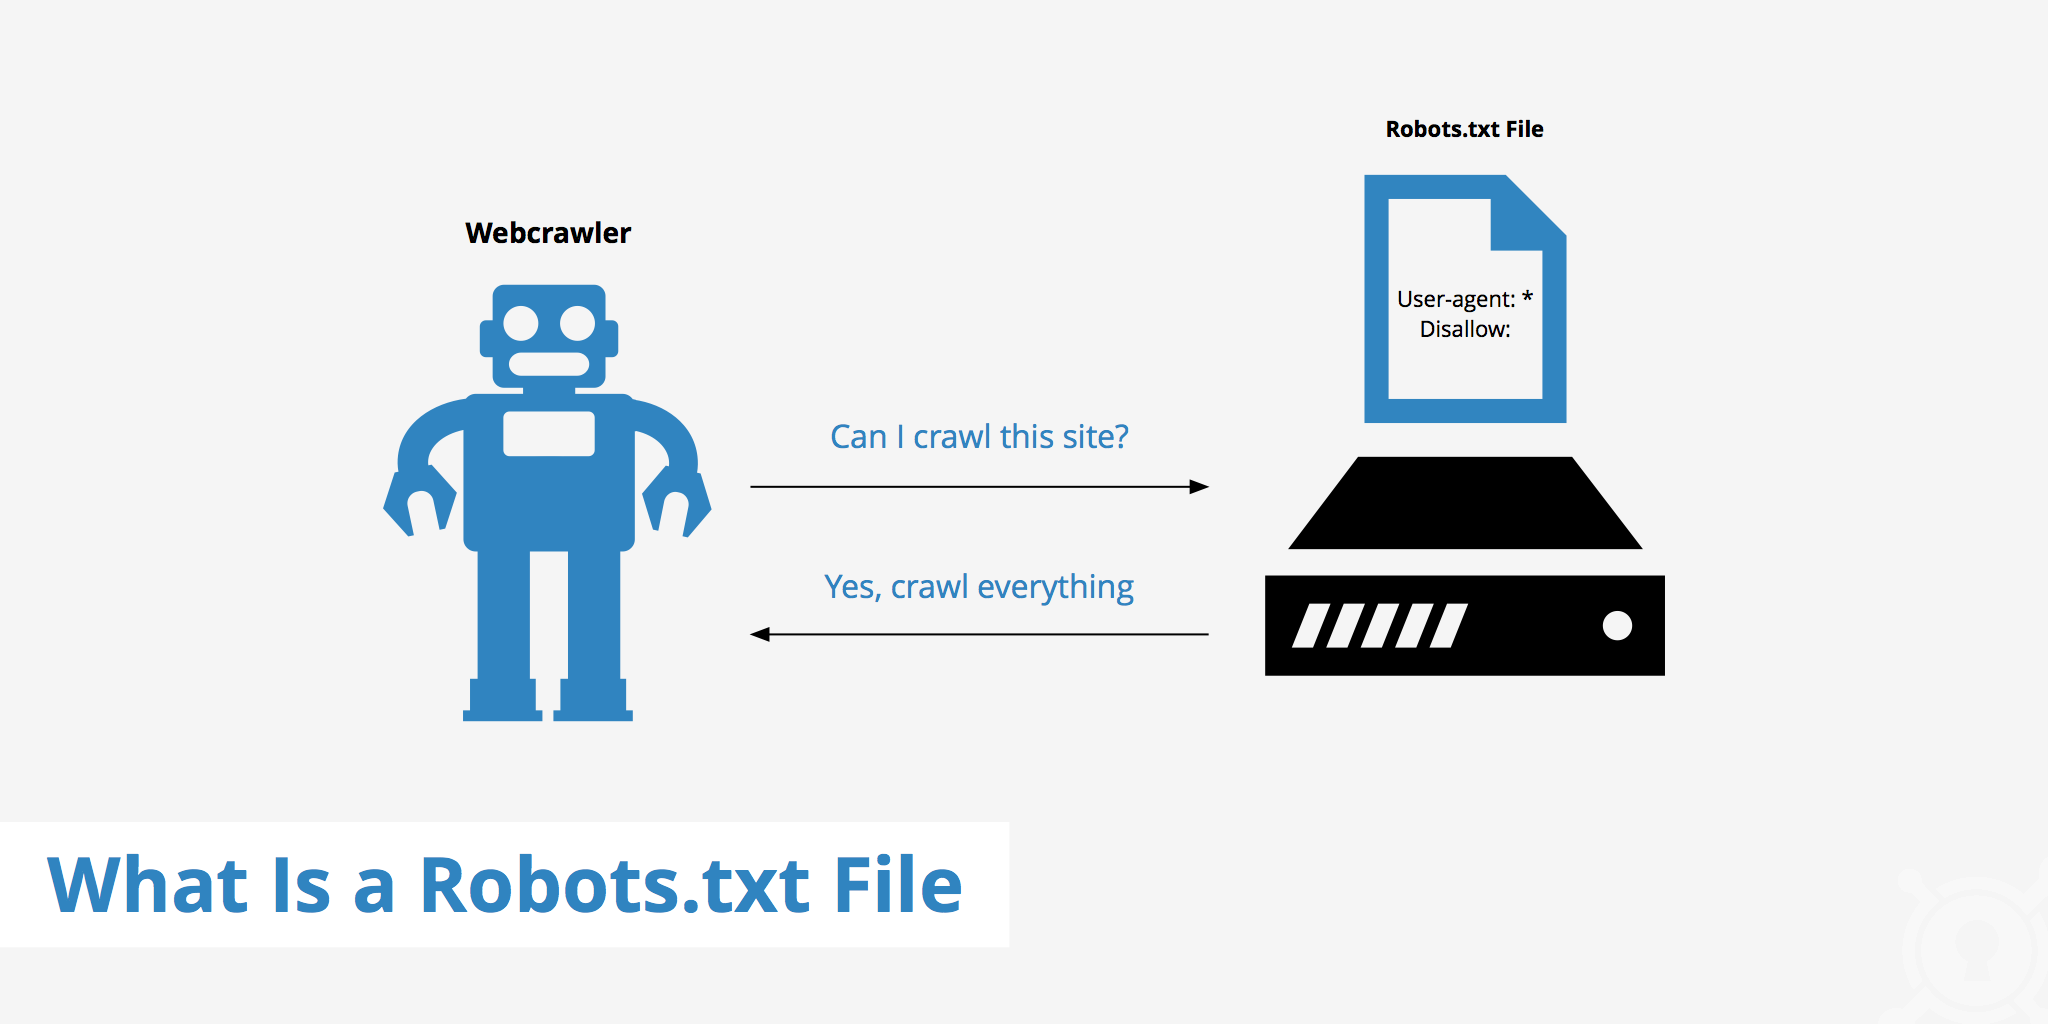 What Is a Robots.txt File